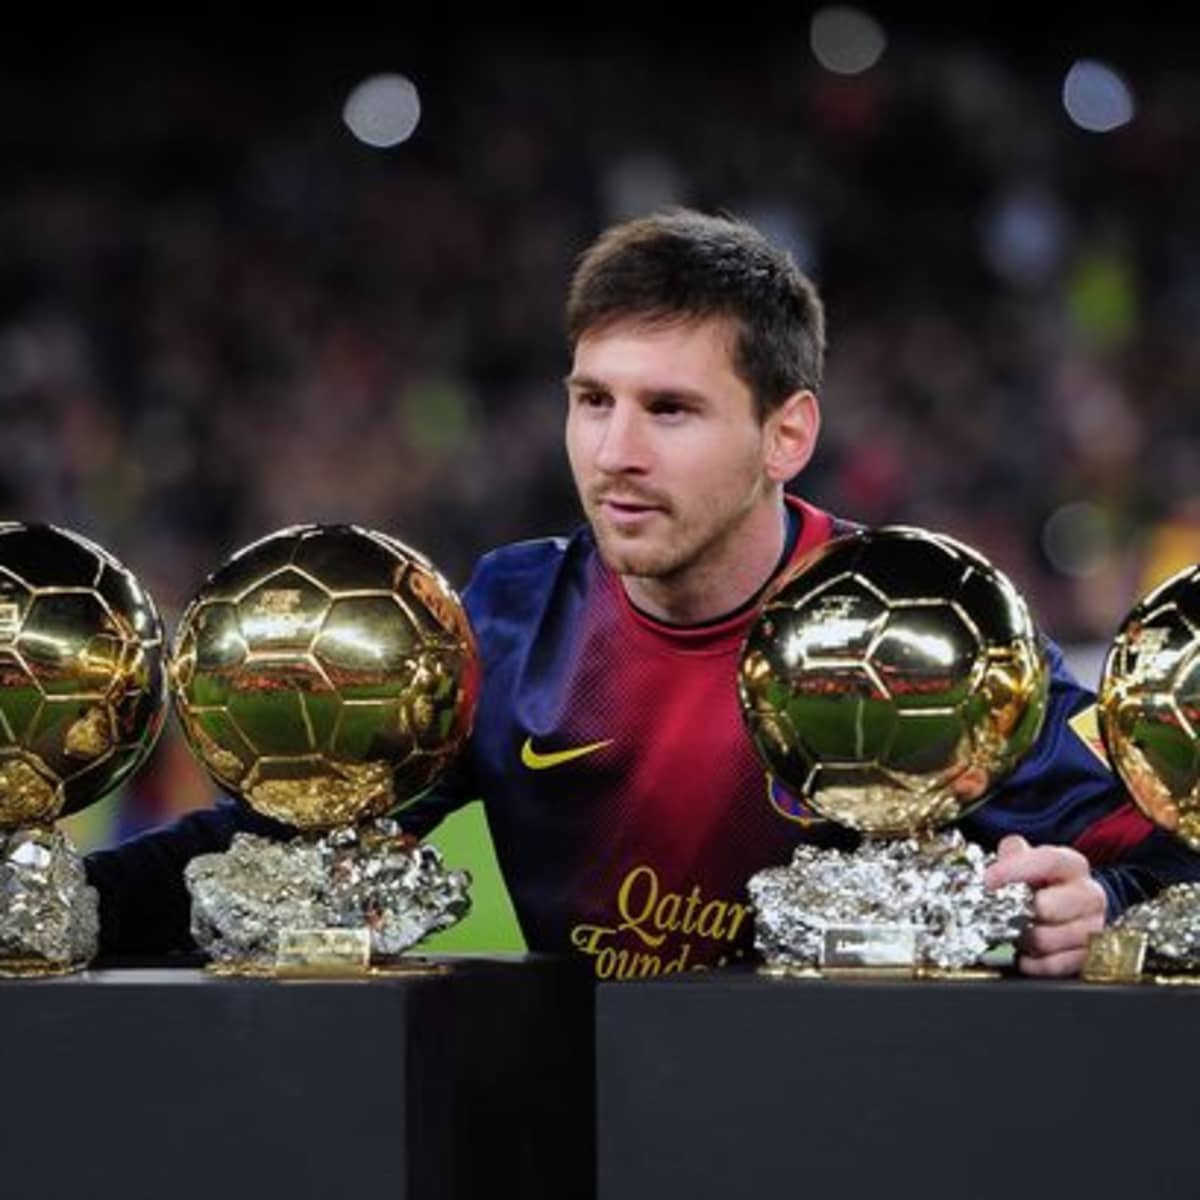 Messi, Ronaldo, Maradona, Pele: Football's 55 biggest legends ranked